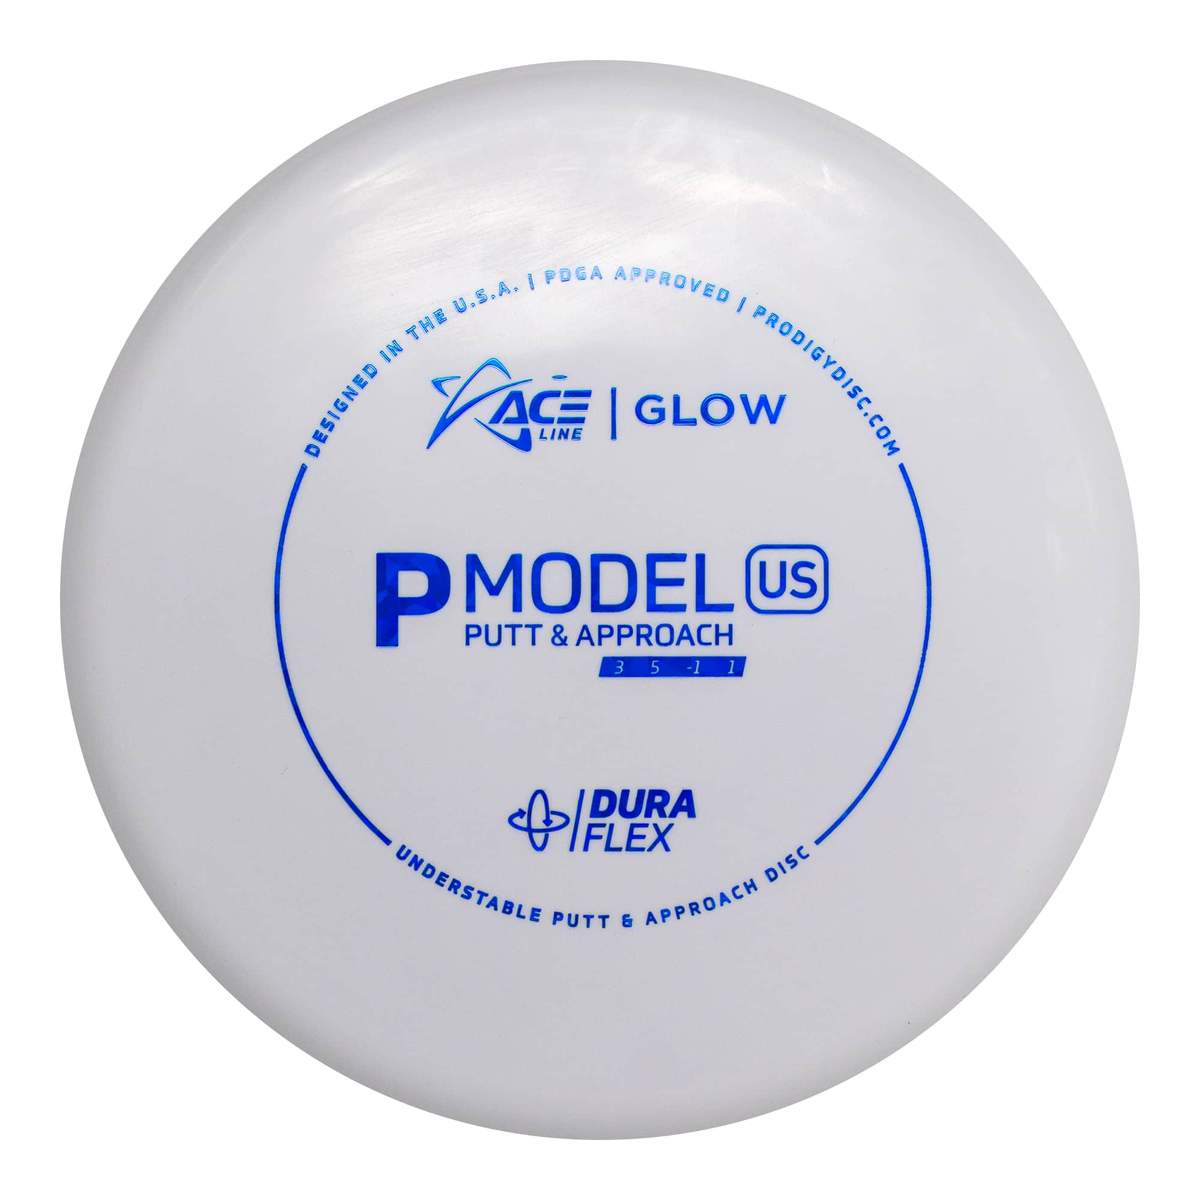 Prodigy Ace Line DuraFlex Glow P Model US